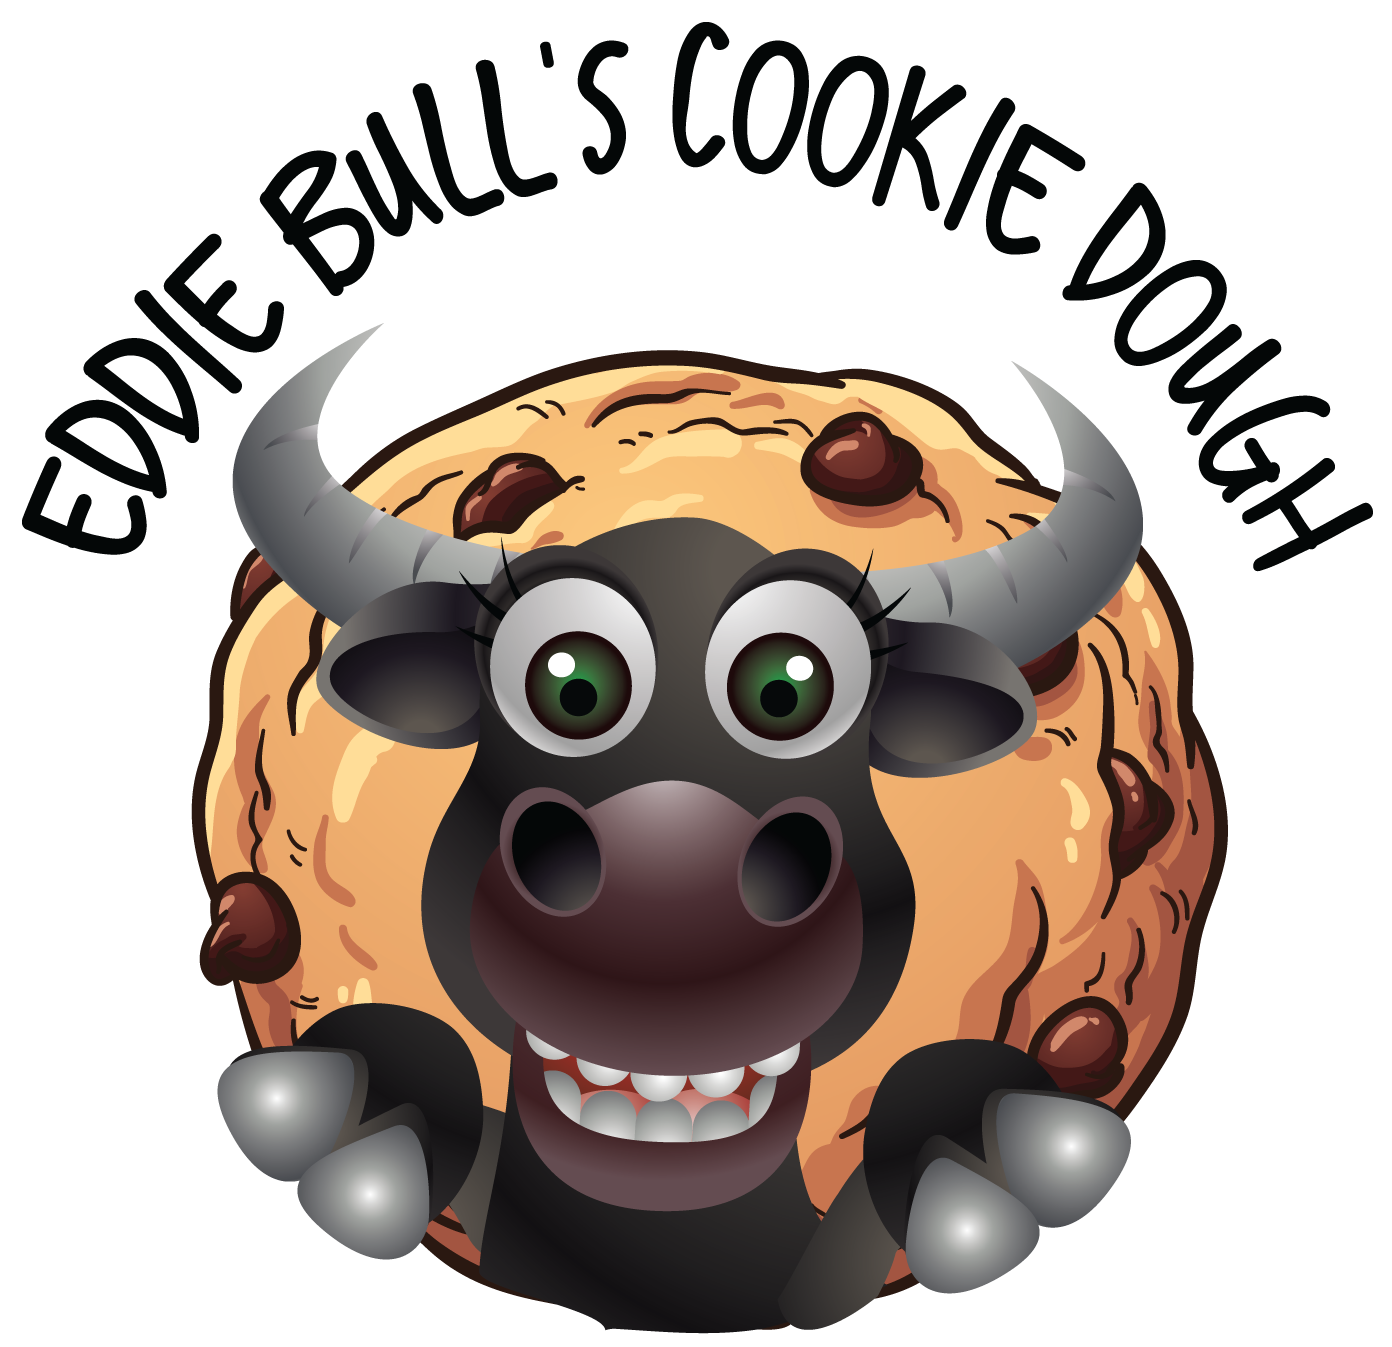 Eddie bulls edible raw. Fundraising clipart cookie dough fundraiser